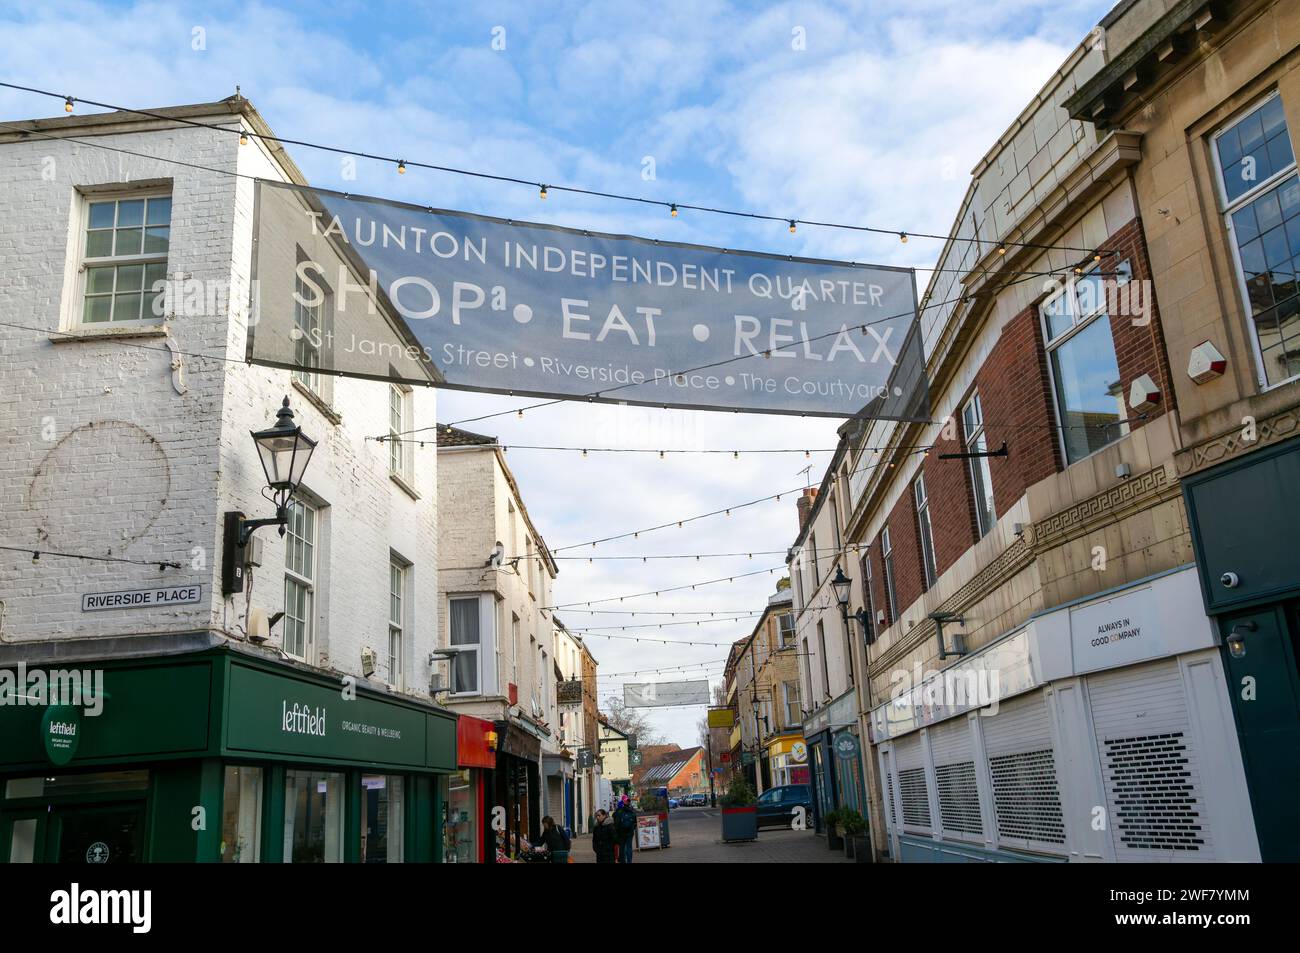 St James Street independent shopping quarter banner sign, Taunton, Somerset, England, UK Stock Photo